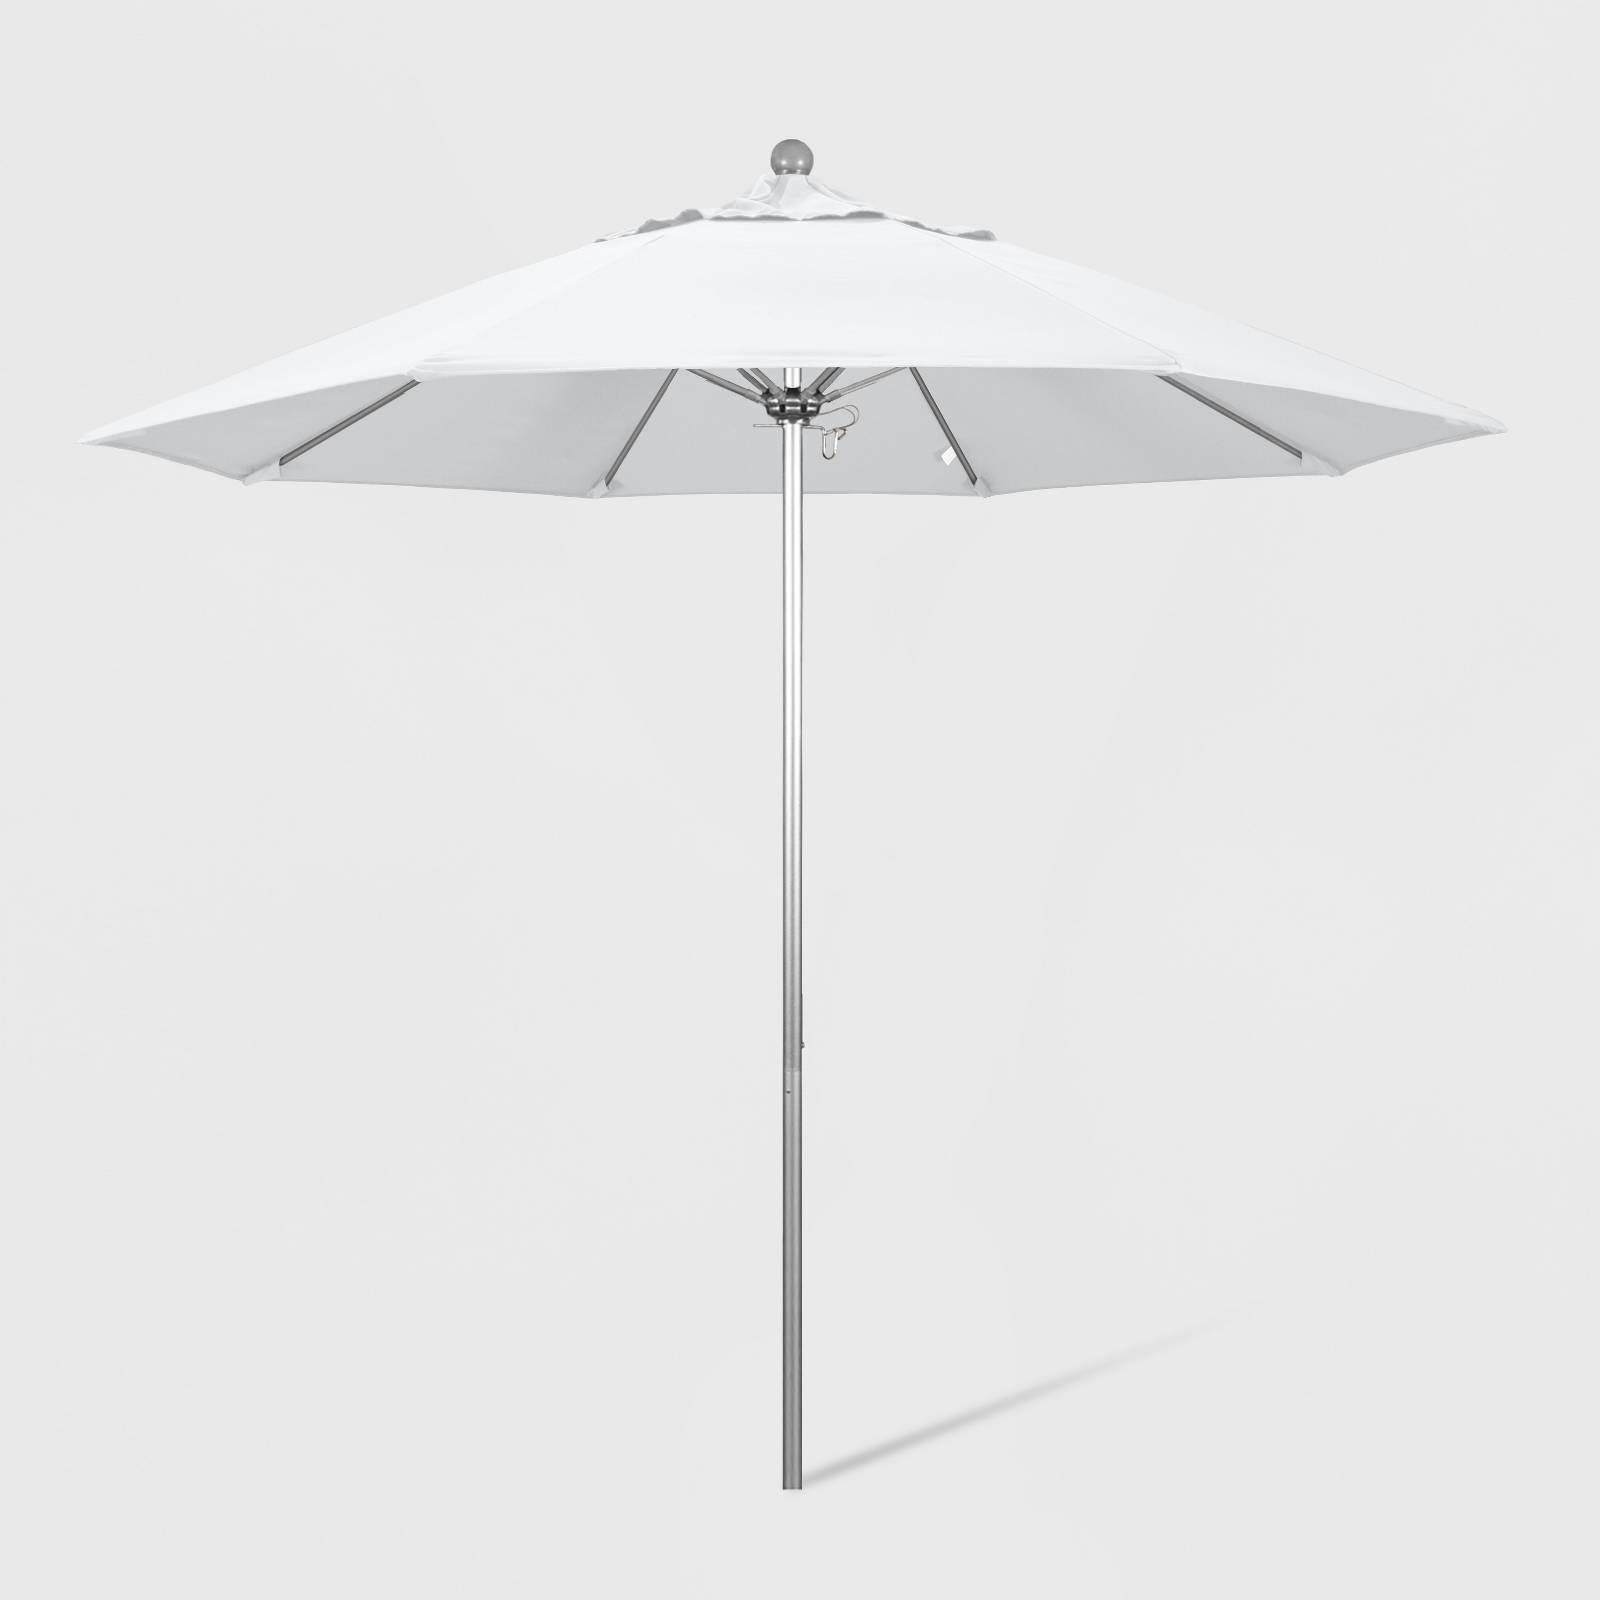 Best ideas about 9' Patio Umbrella
. Save or Pin 9 Aluminum Pulley Open Patio Umbrella California Now.